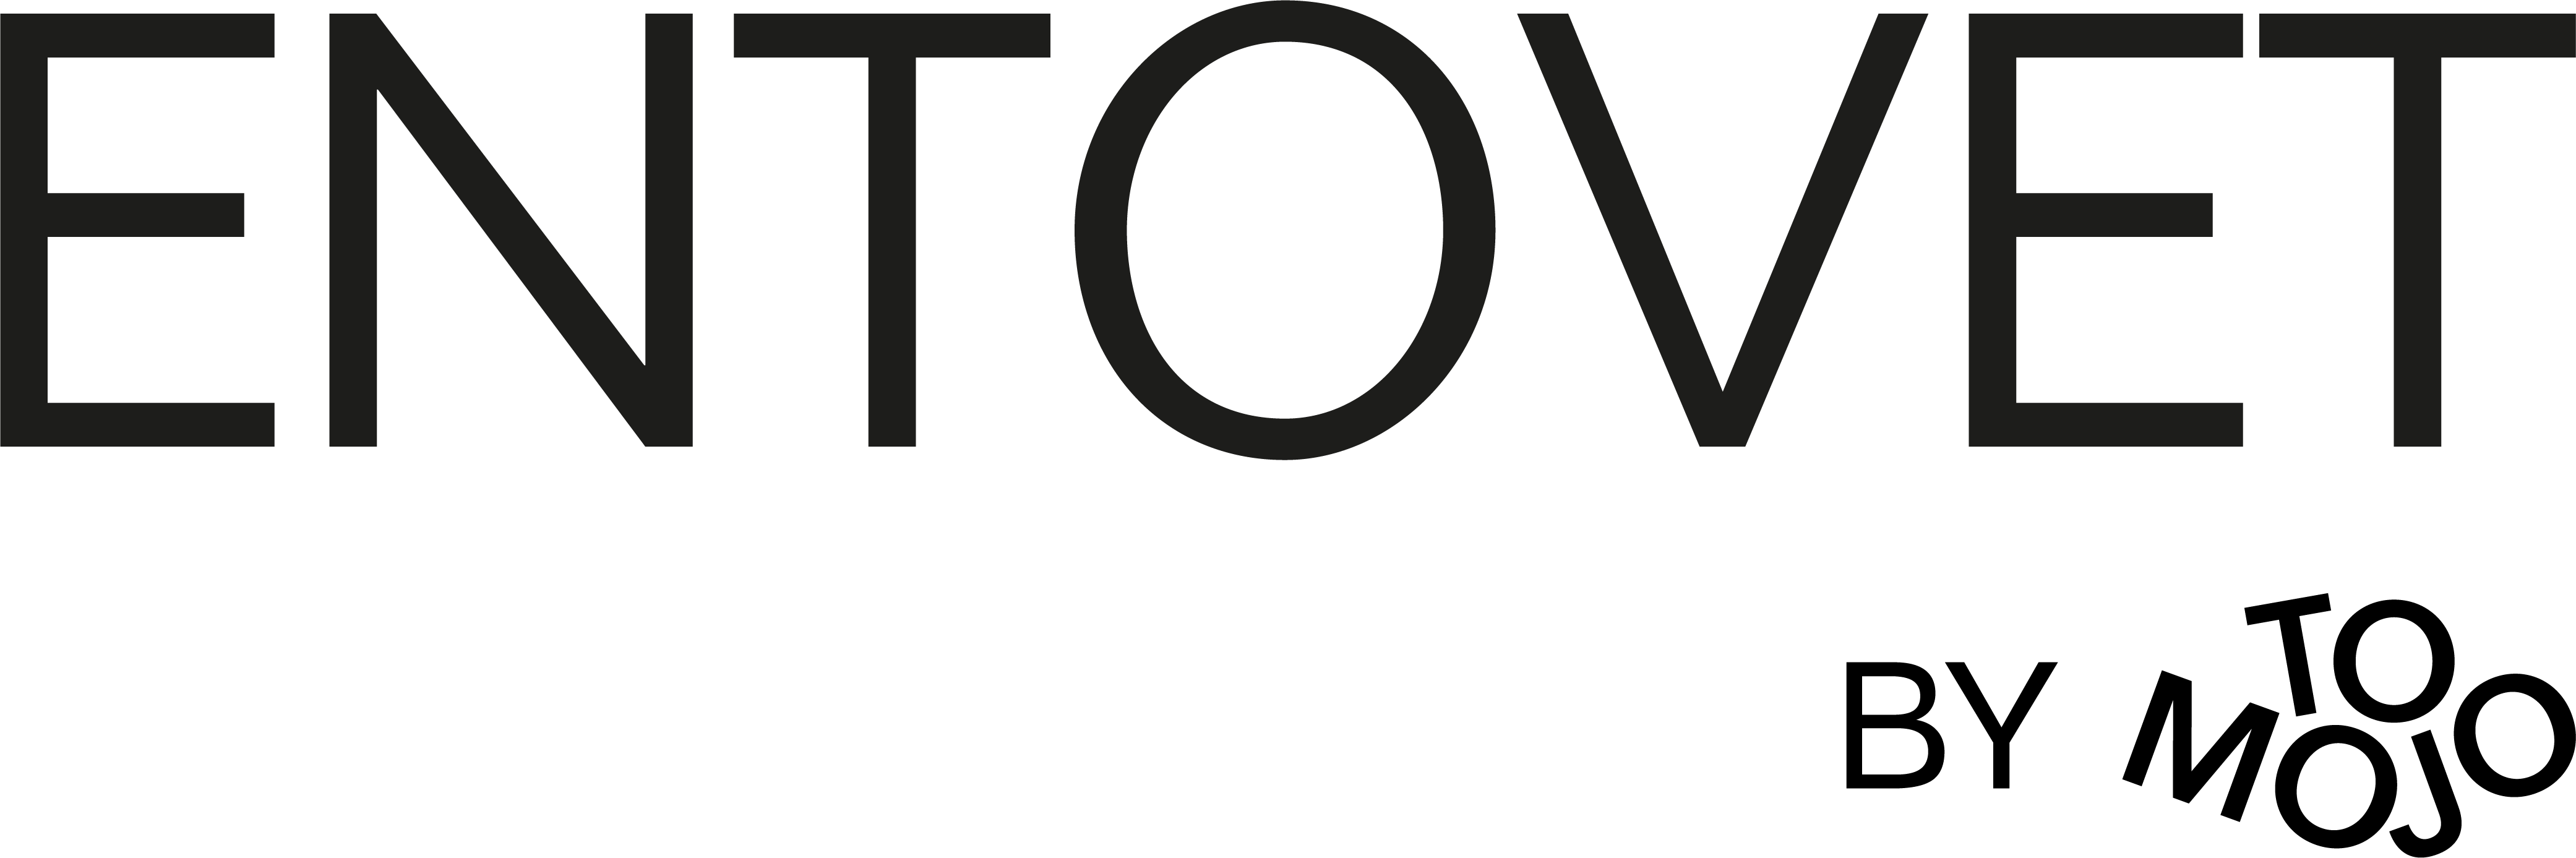 Entovet Logo